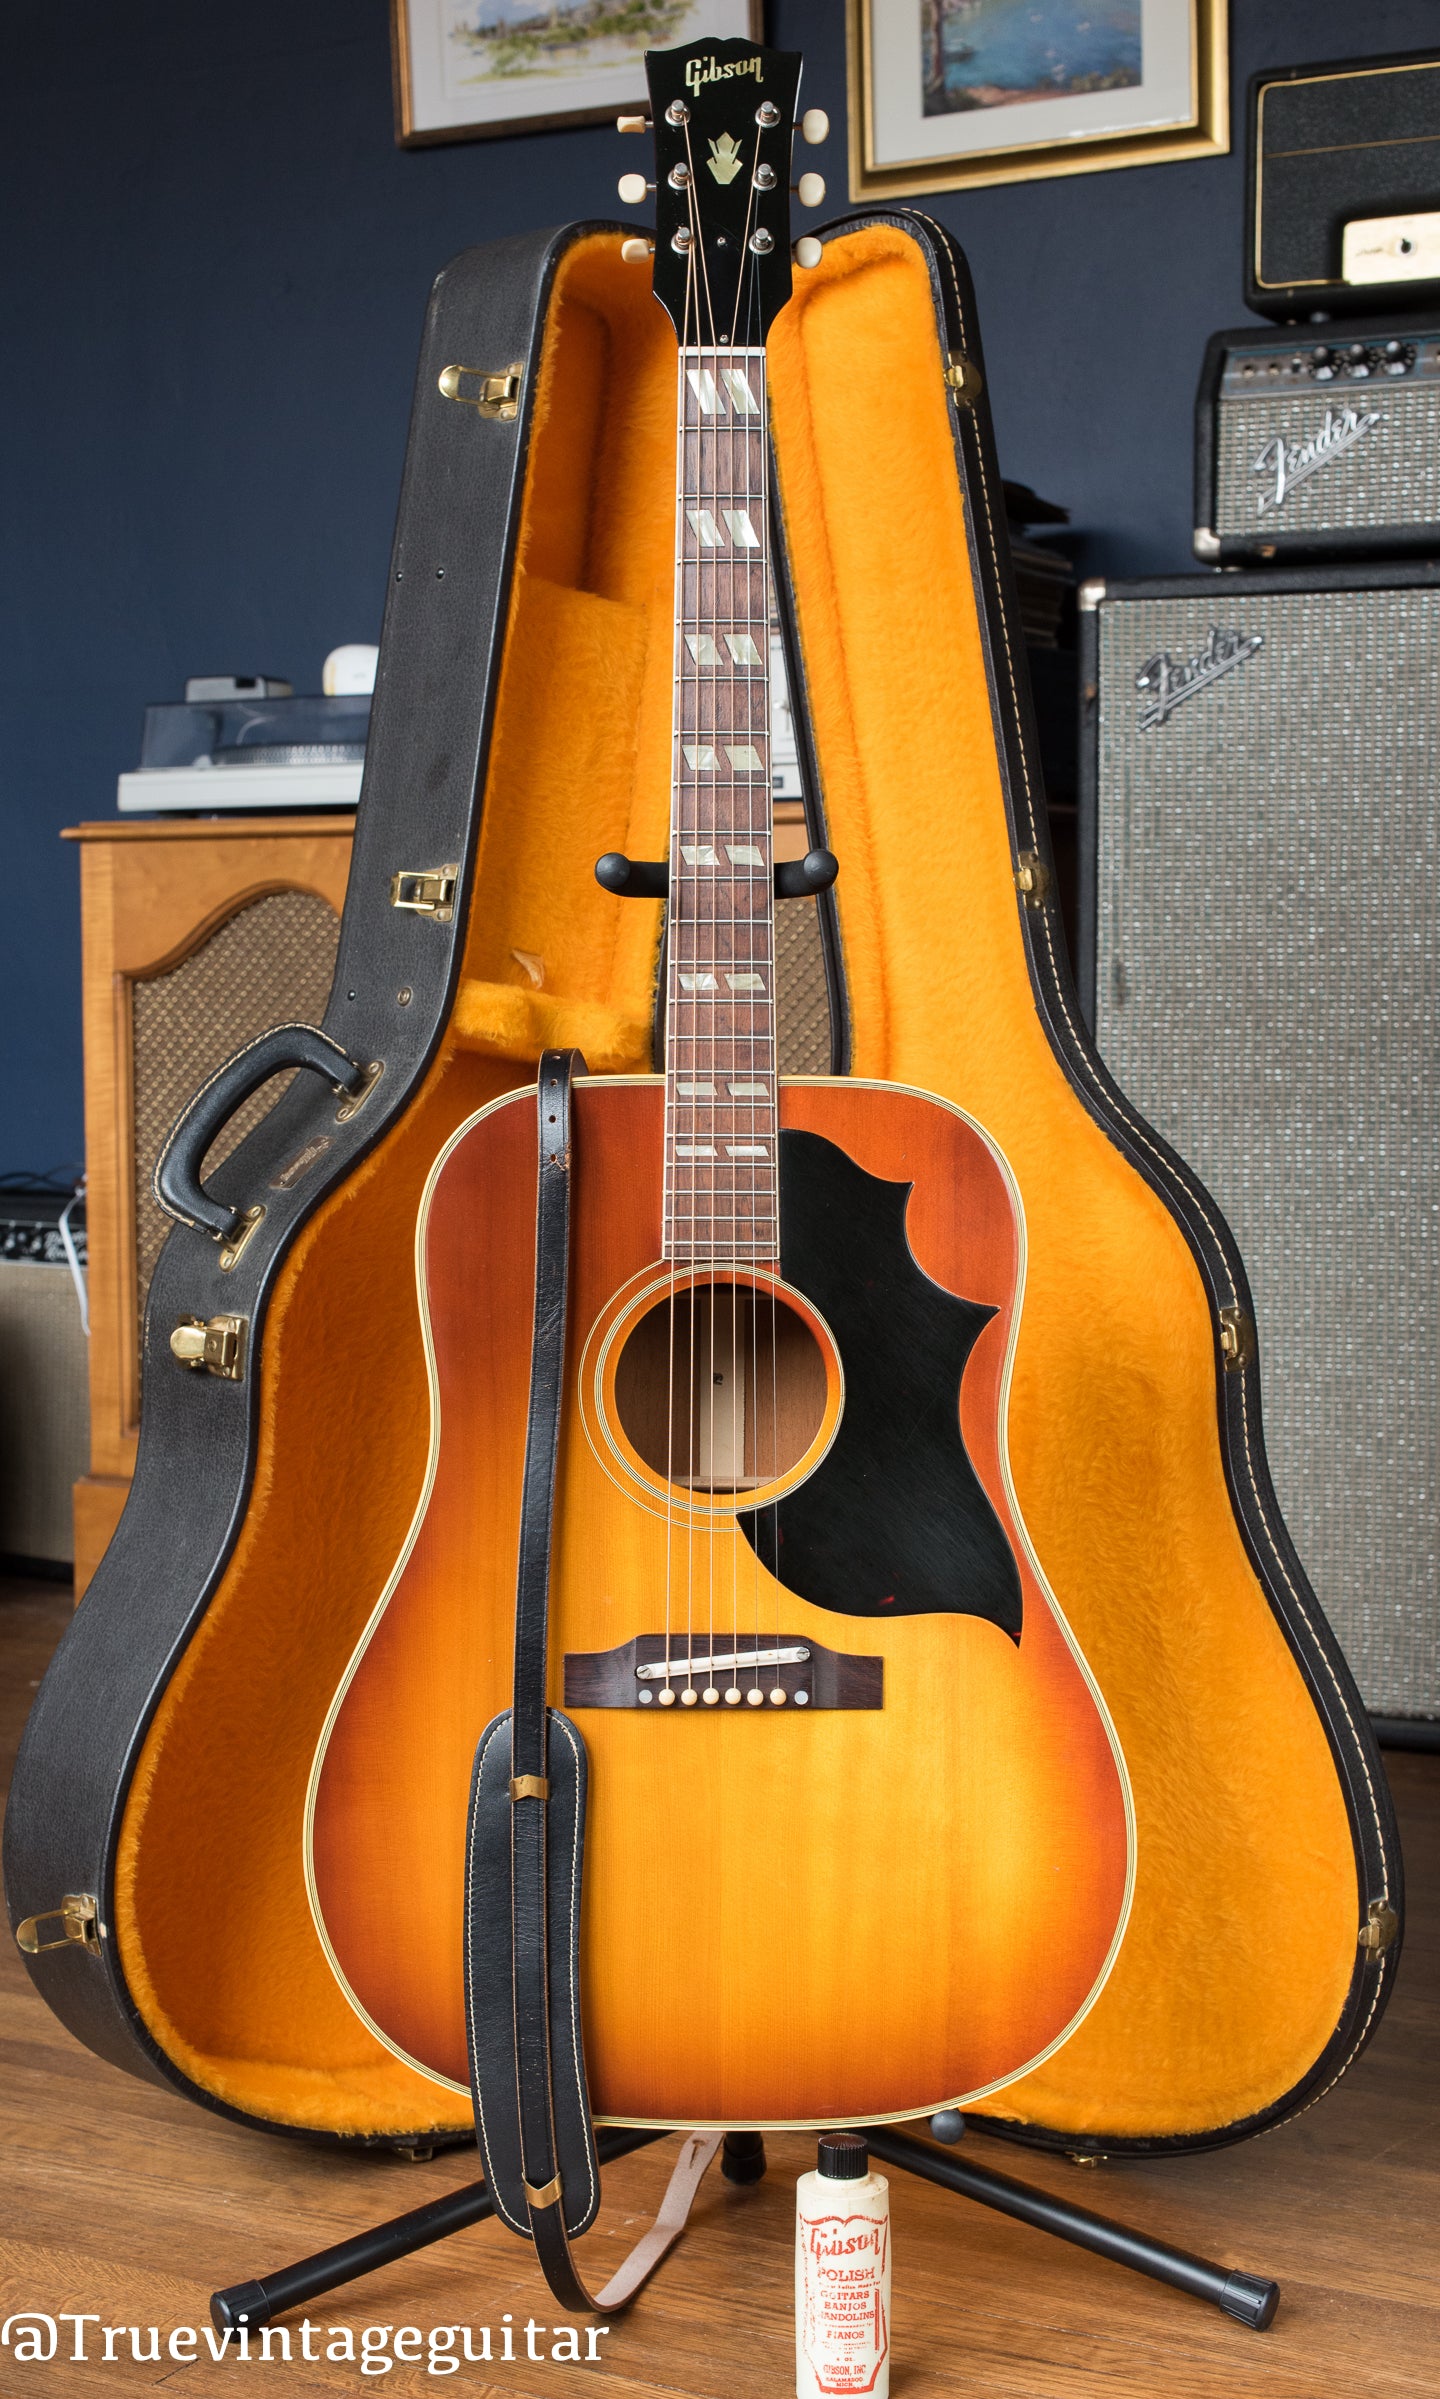 1965 Gibson SJ acoustic guitar